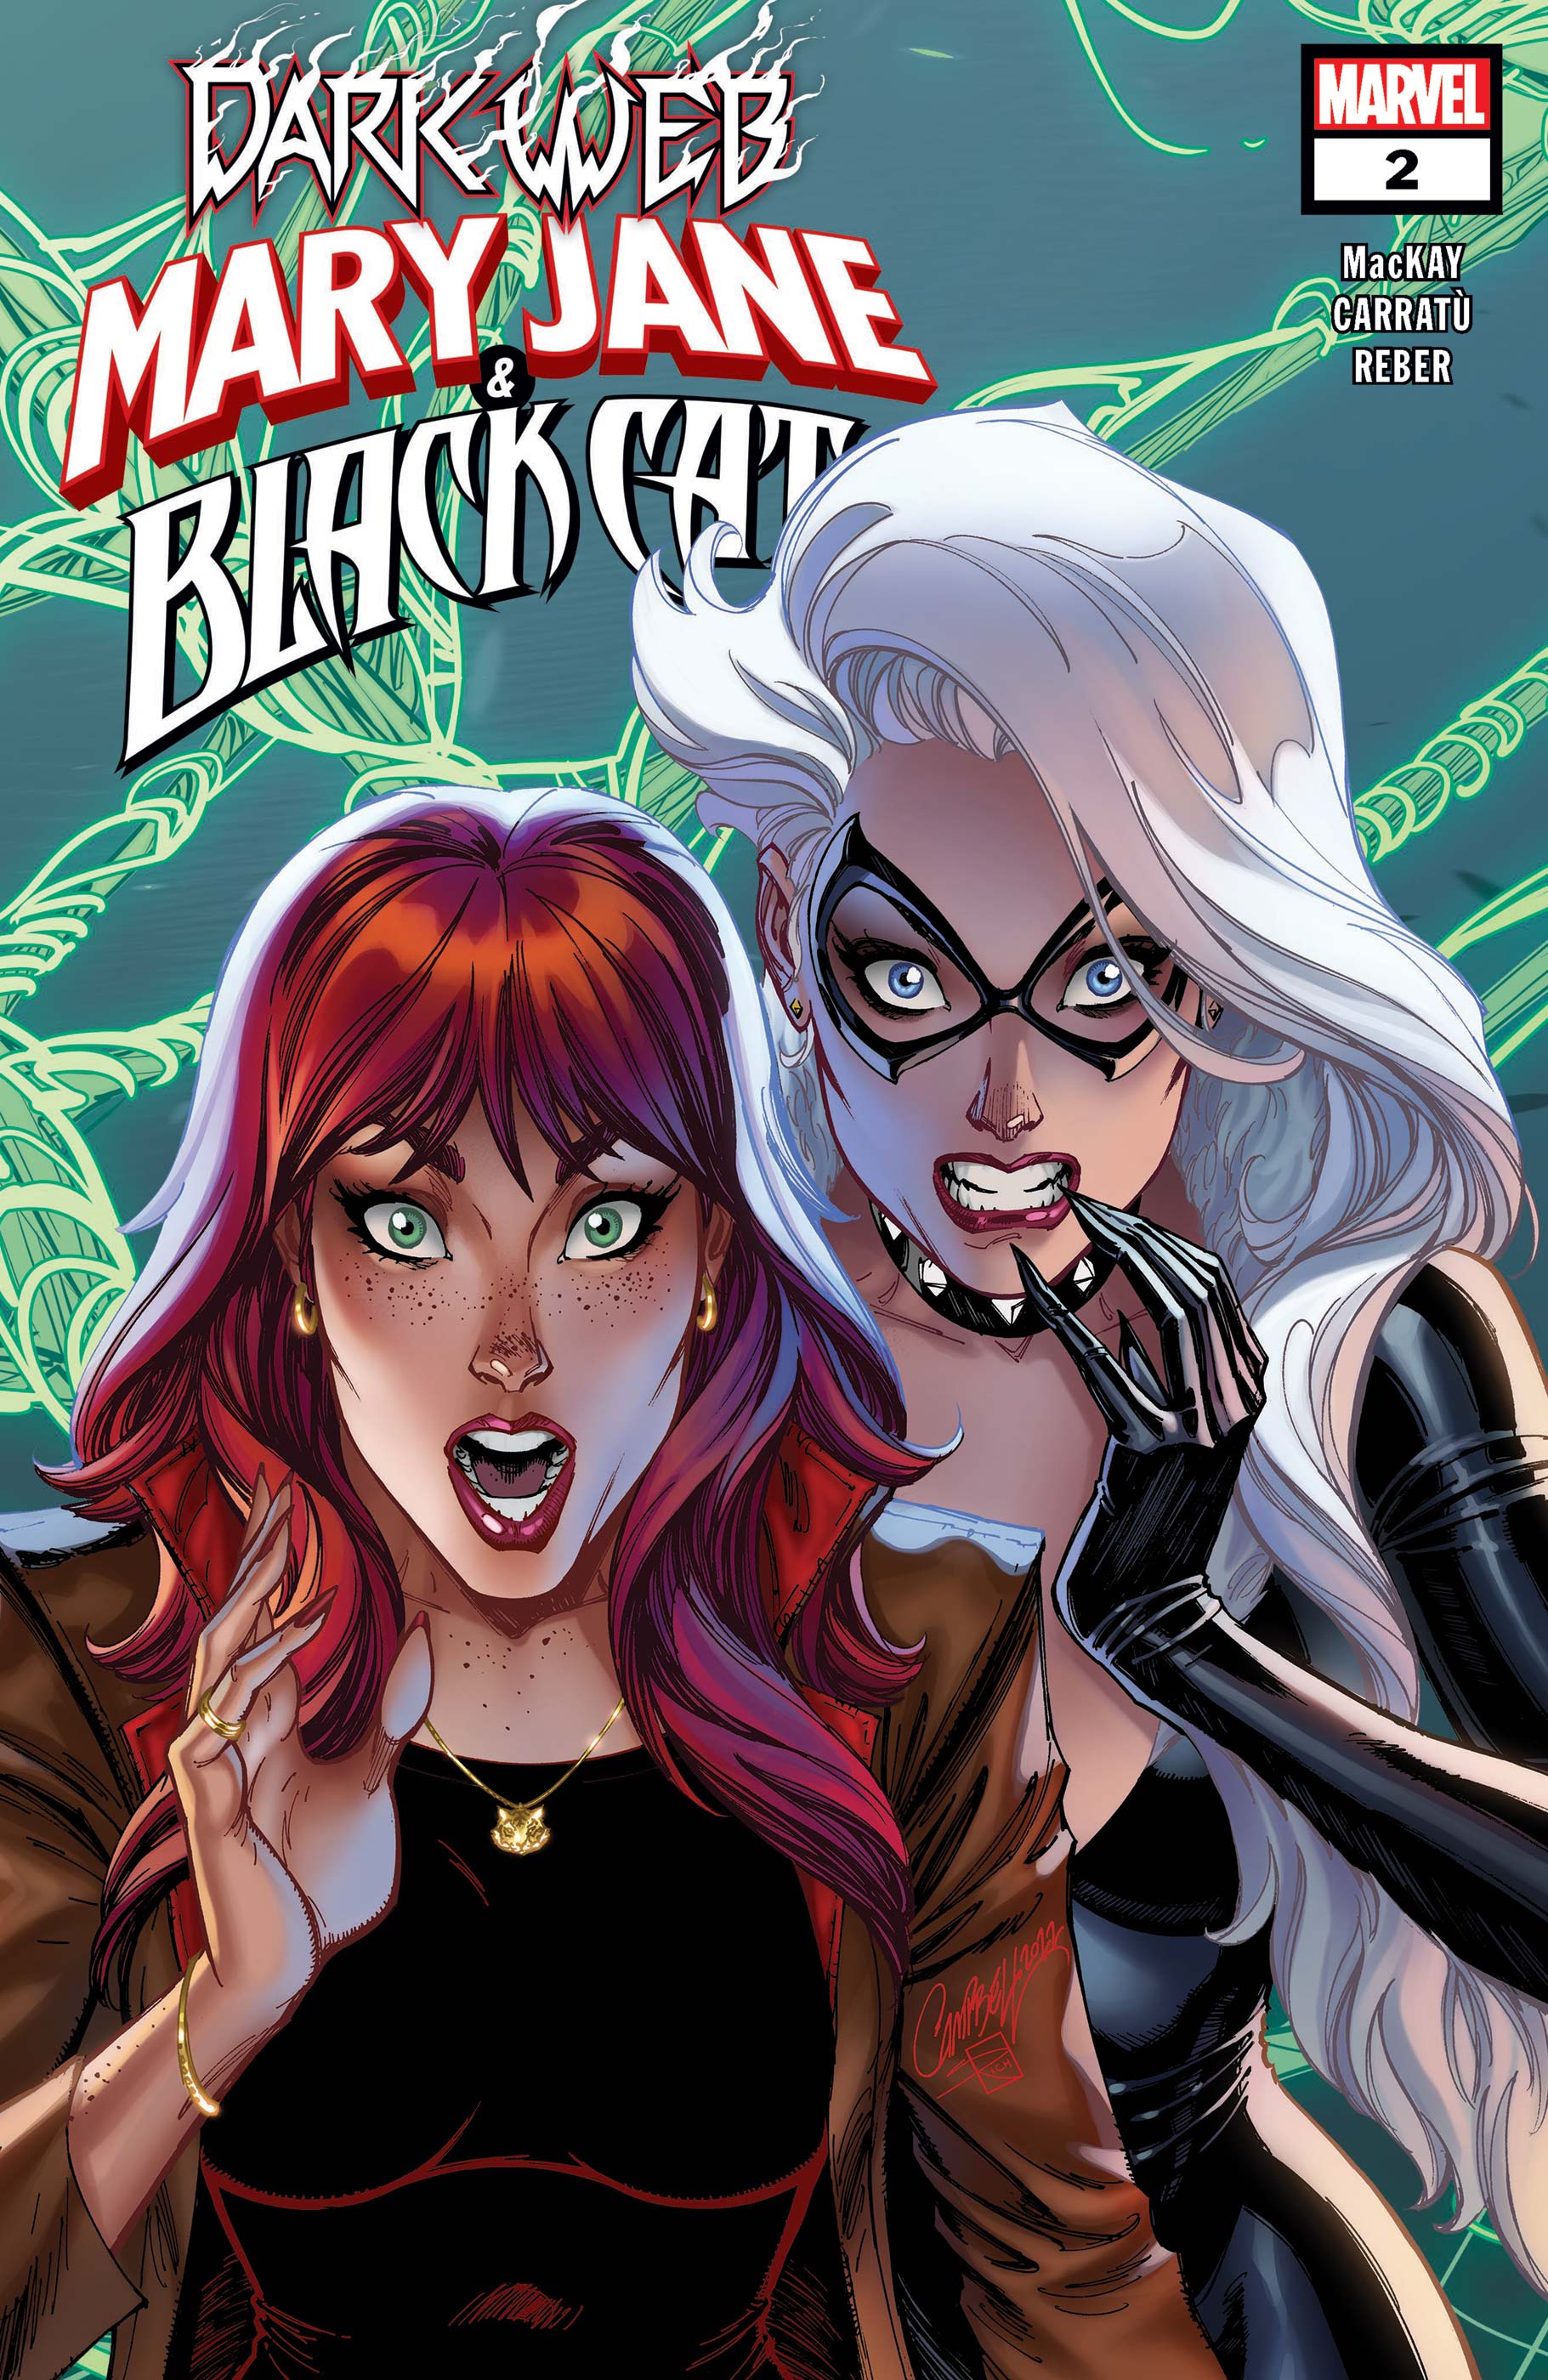 Mary Jane & Black Cat (2022) #2